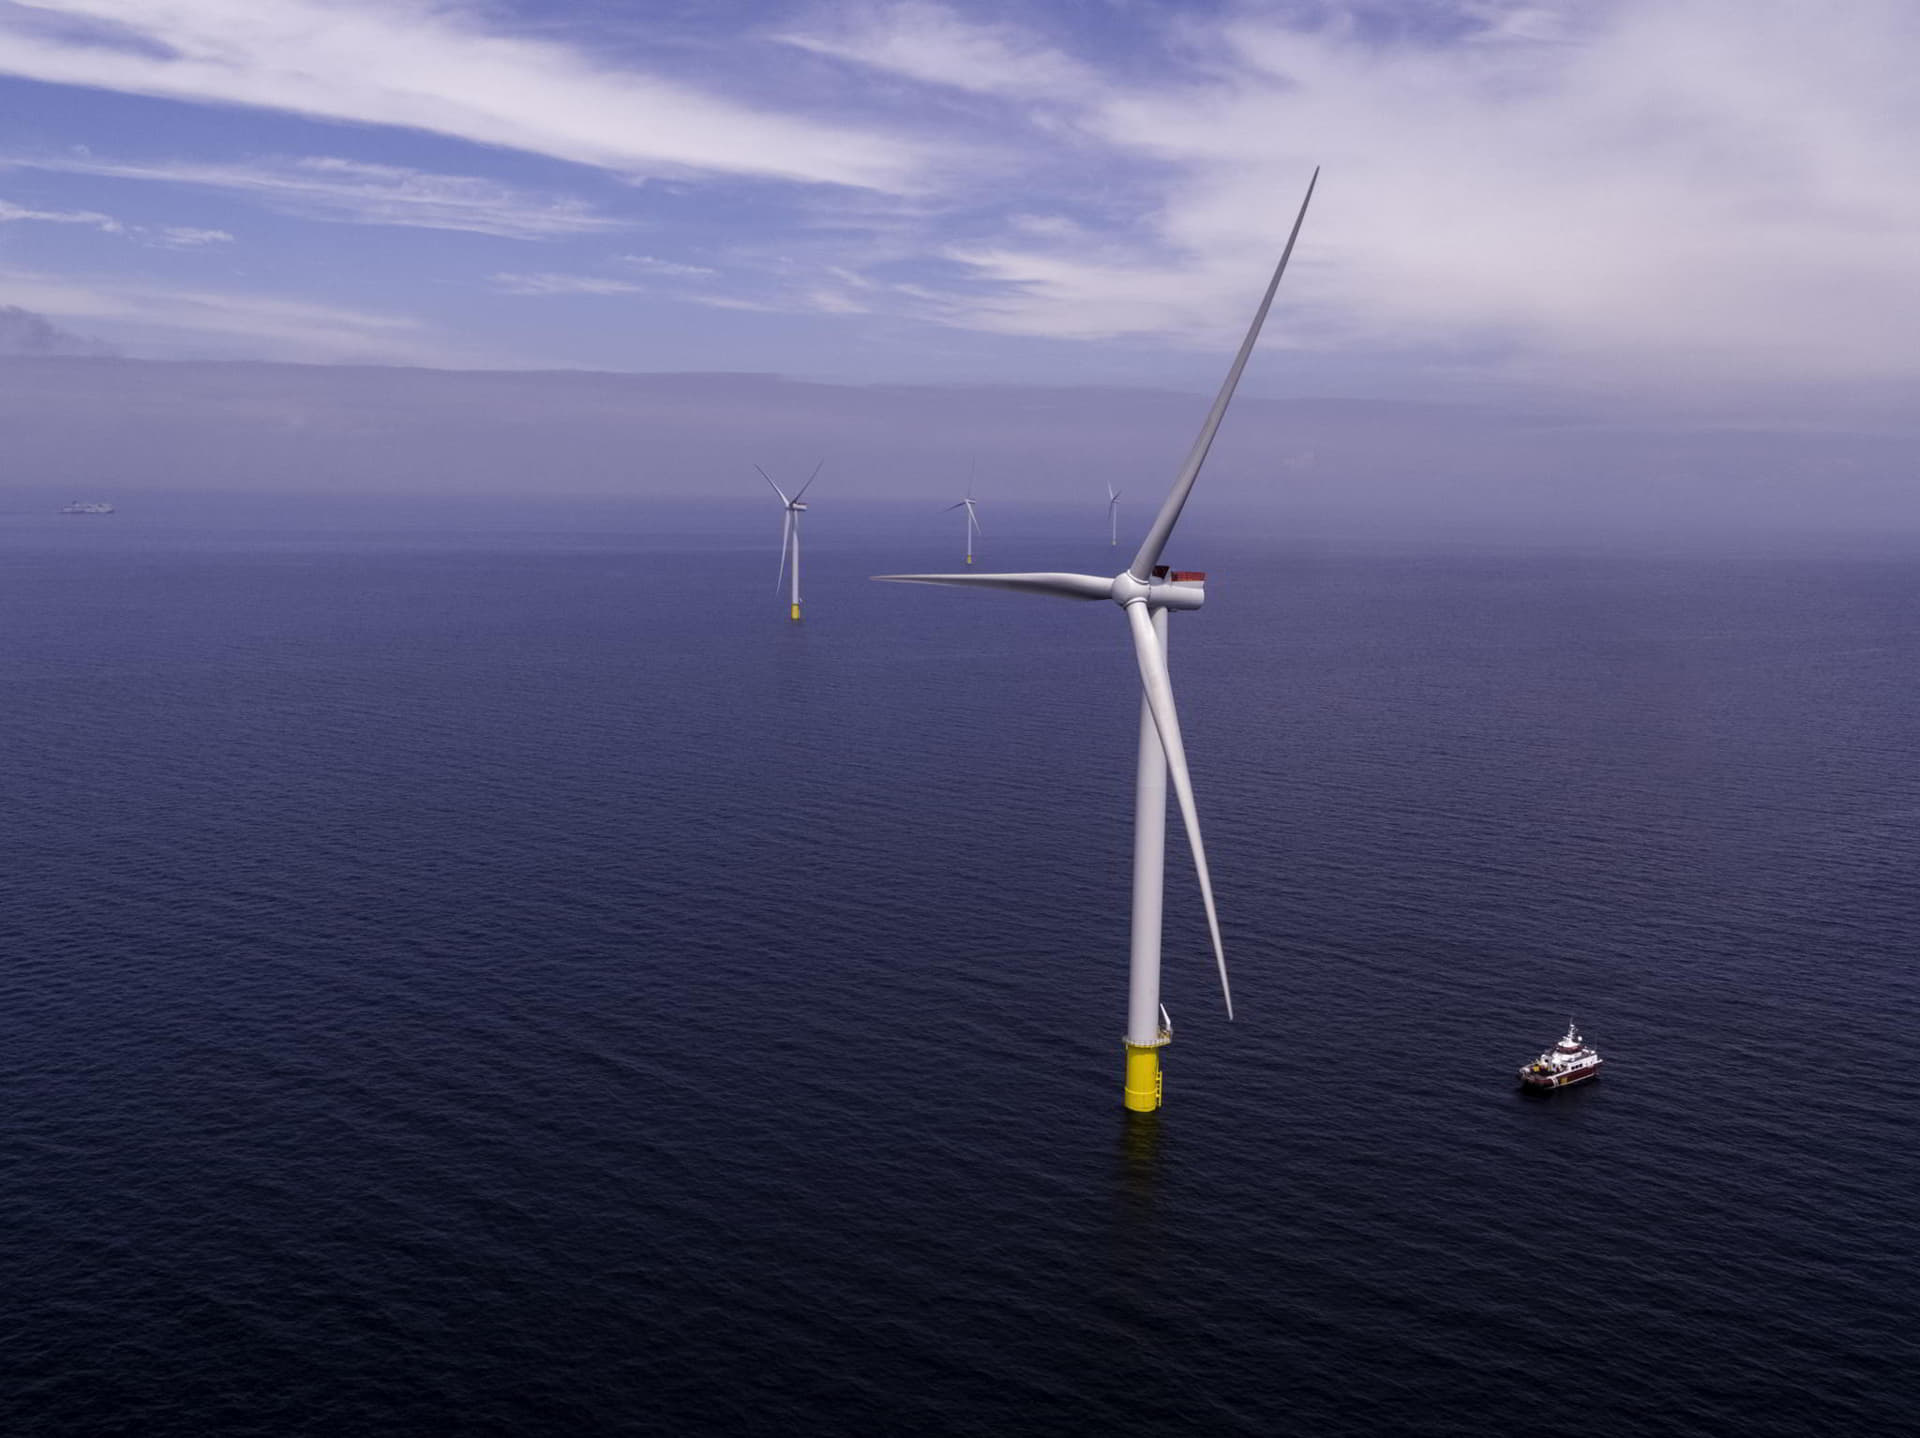 Kriegers Flak offshore wind farm in the Danish Baltic Sea